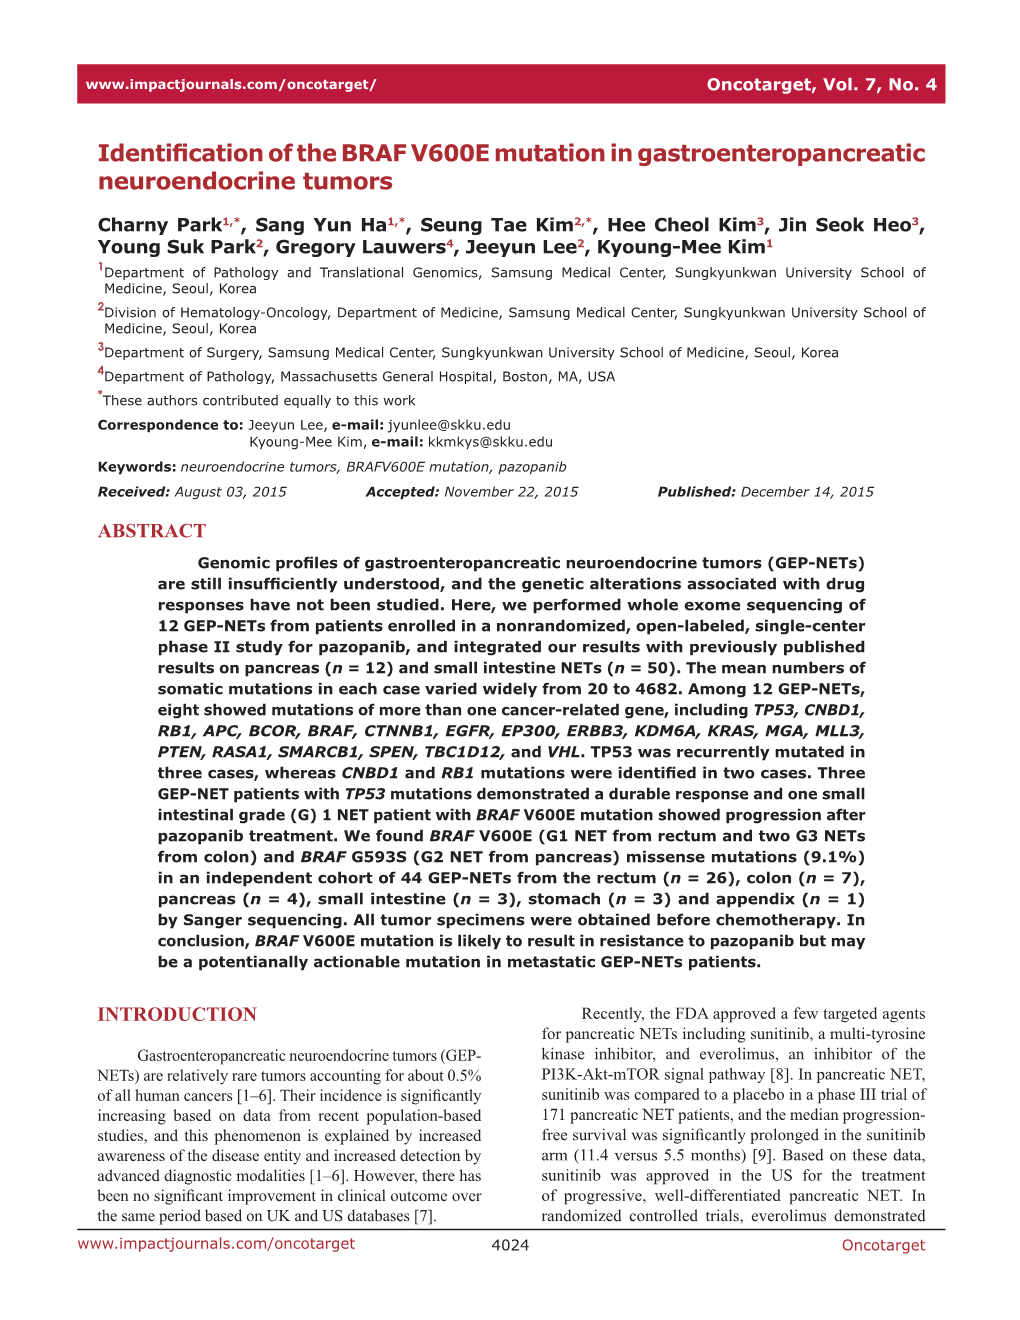 Identification of the BRAF V600E Mutation in Gastroenteropancreatic Neuroendocrine Tumors